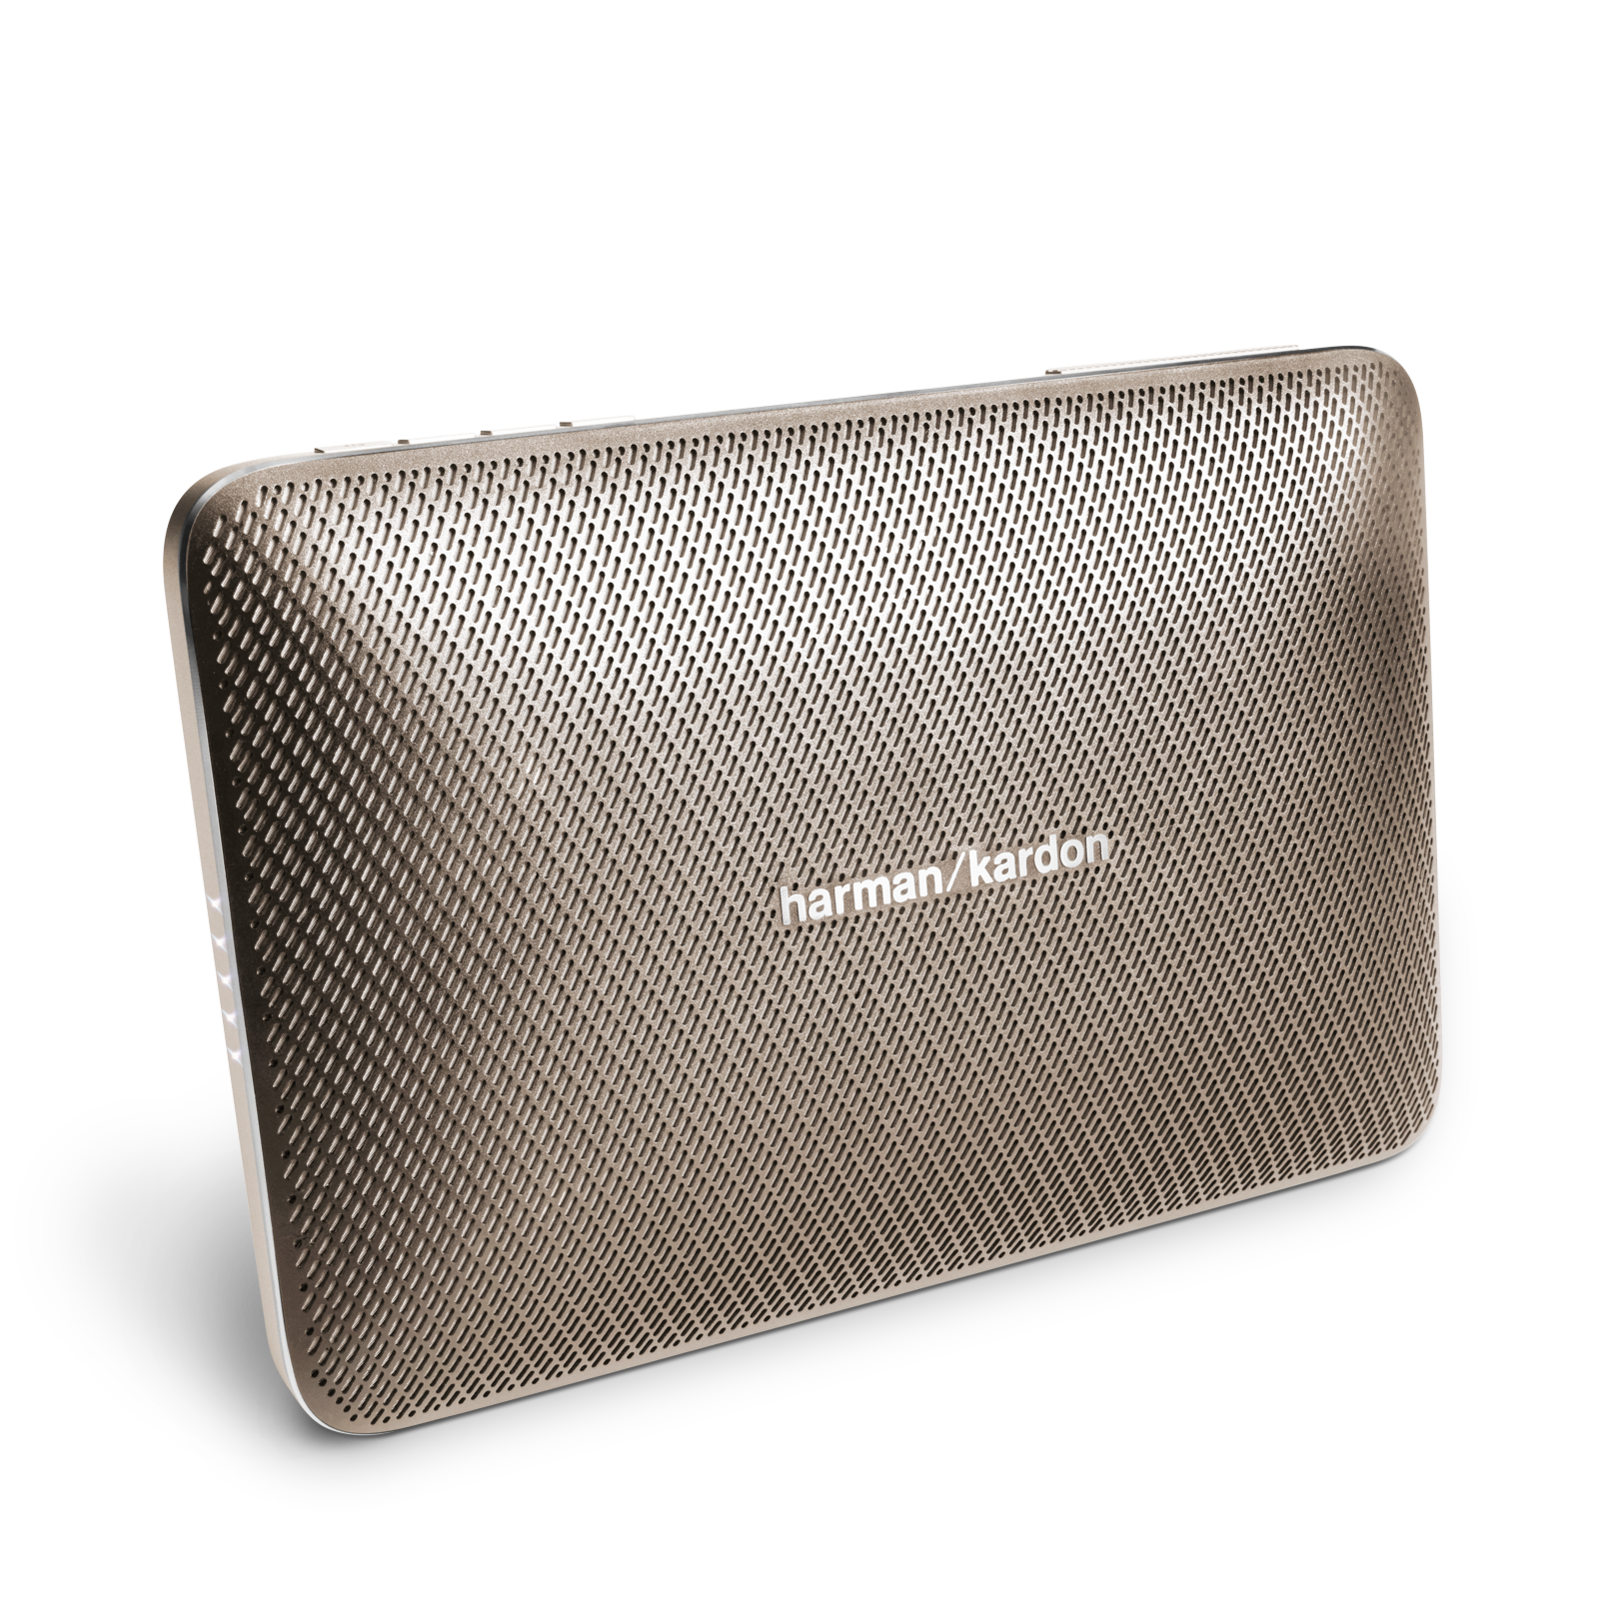 Esquire 2 - Gold - Premium portable Bluetooth speaker with quad microphone conferencing system - Hero